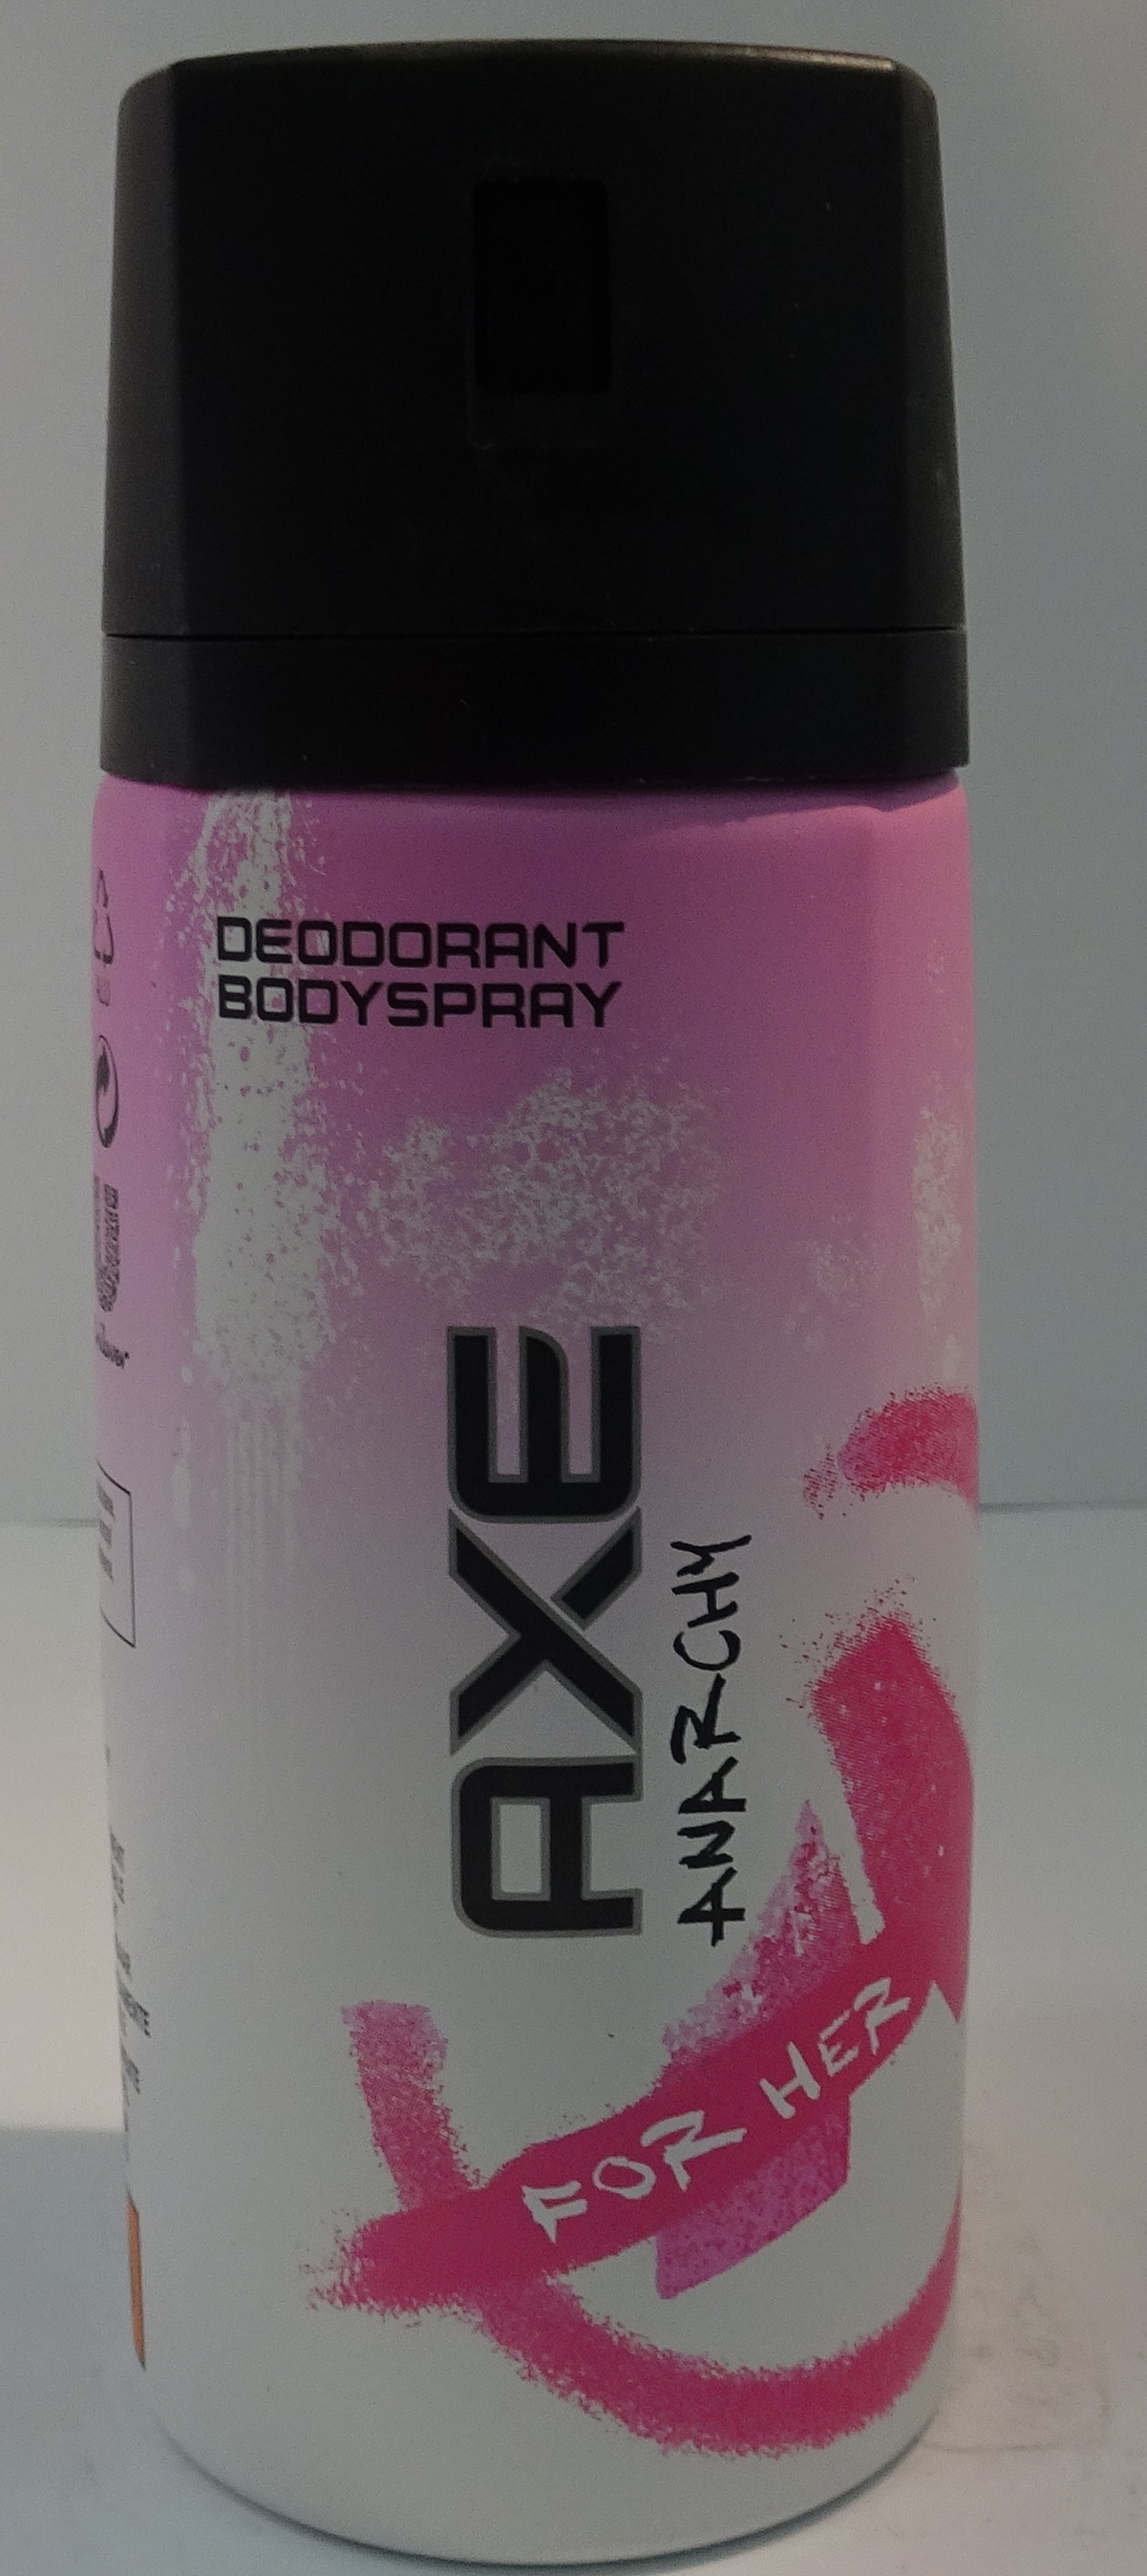 AXE Deodorant Bodyspray Anarchy for Her 150 ml